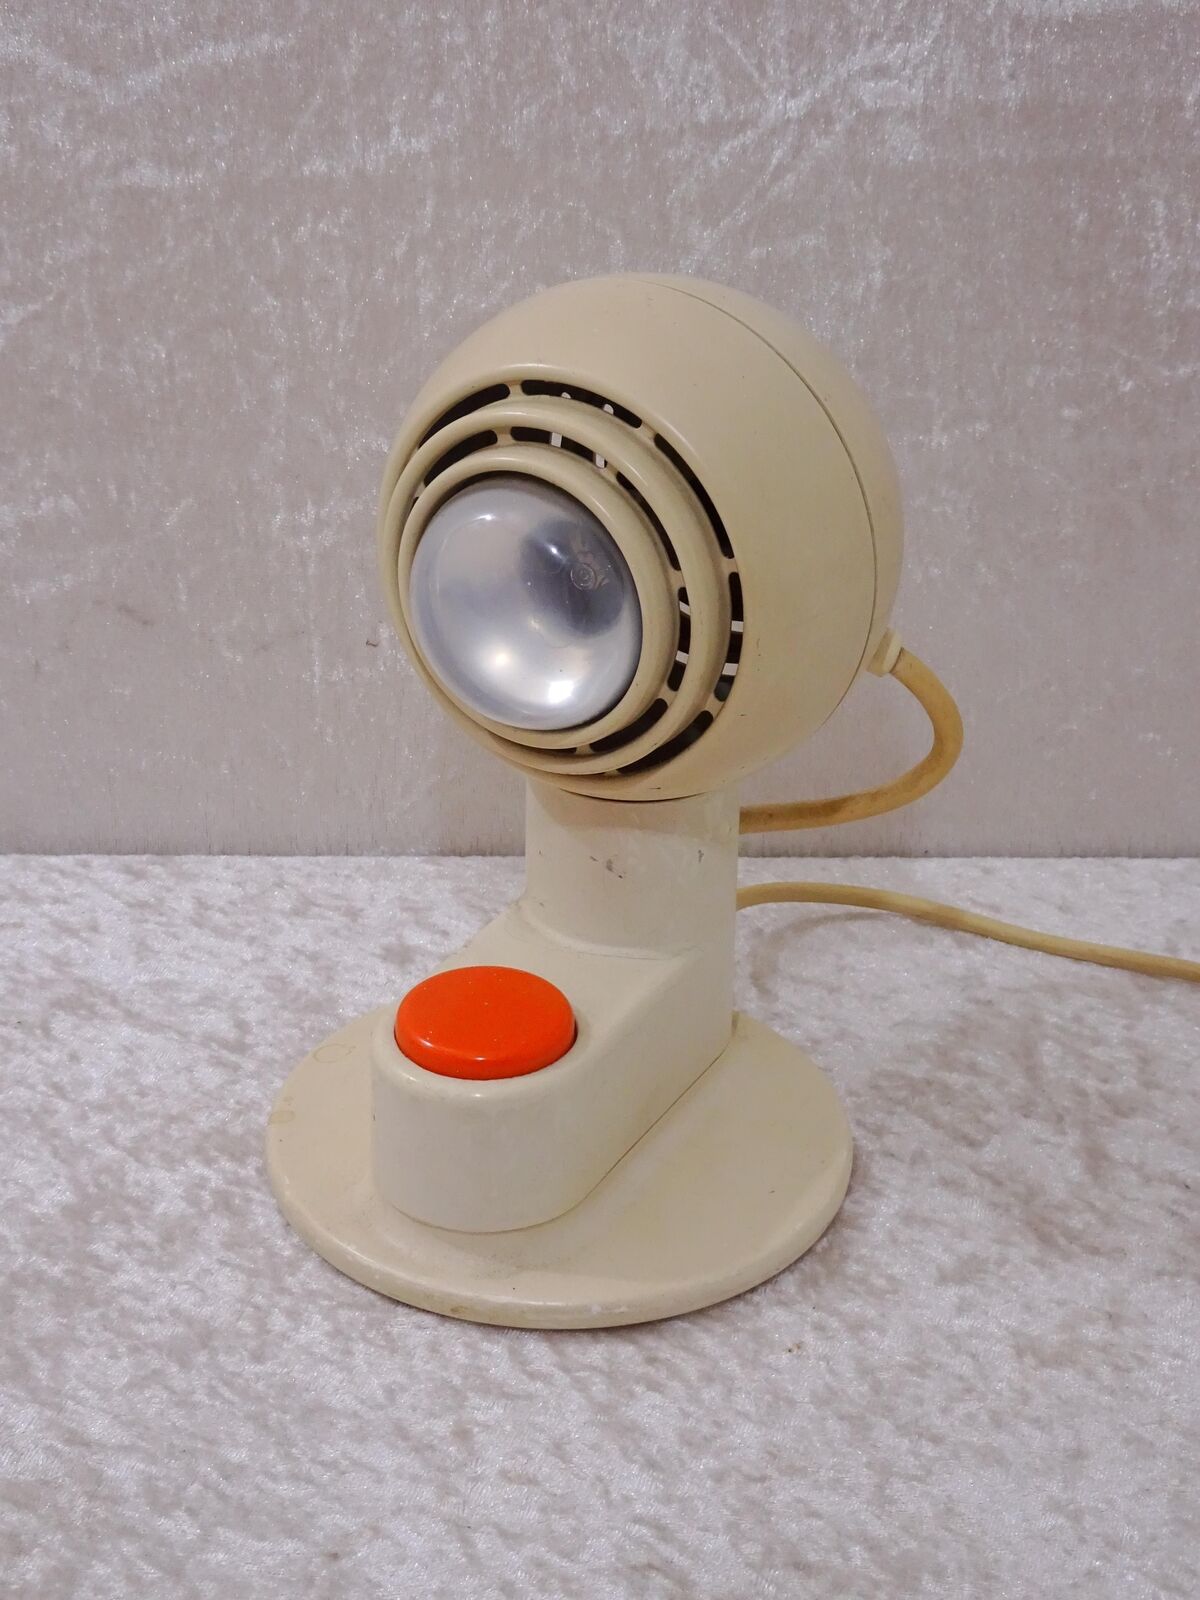 Osram Design Schultes Sphere Lamp Light Concentra Agilo T 40 Vintage around 1970